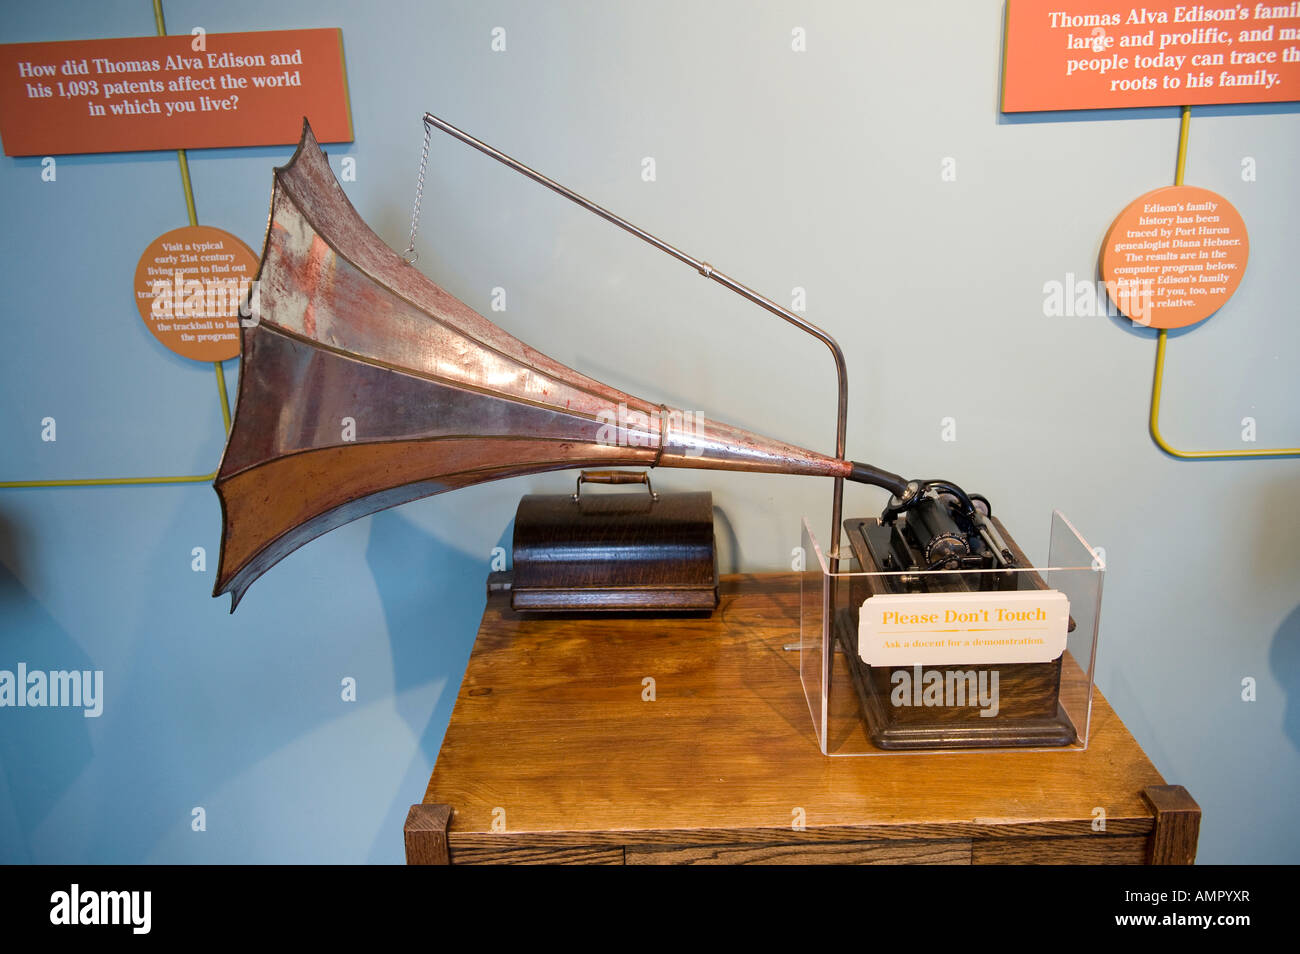 Thomas Edison historic images and the Edison Standard Phonograph Stock Photo